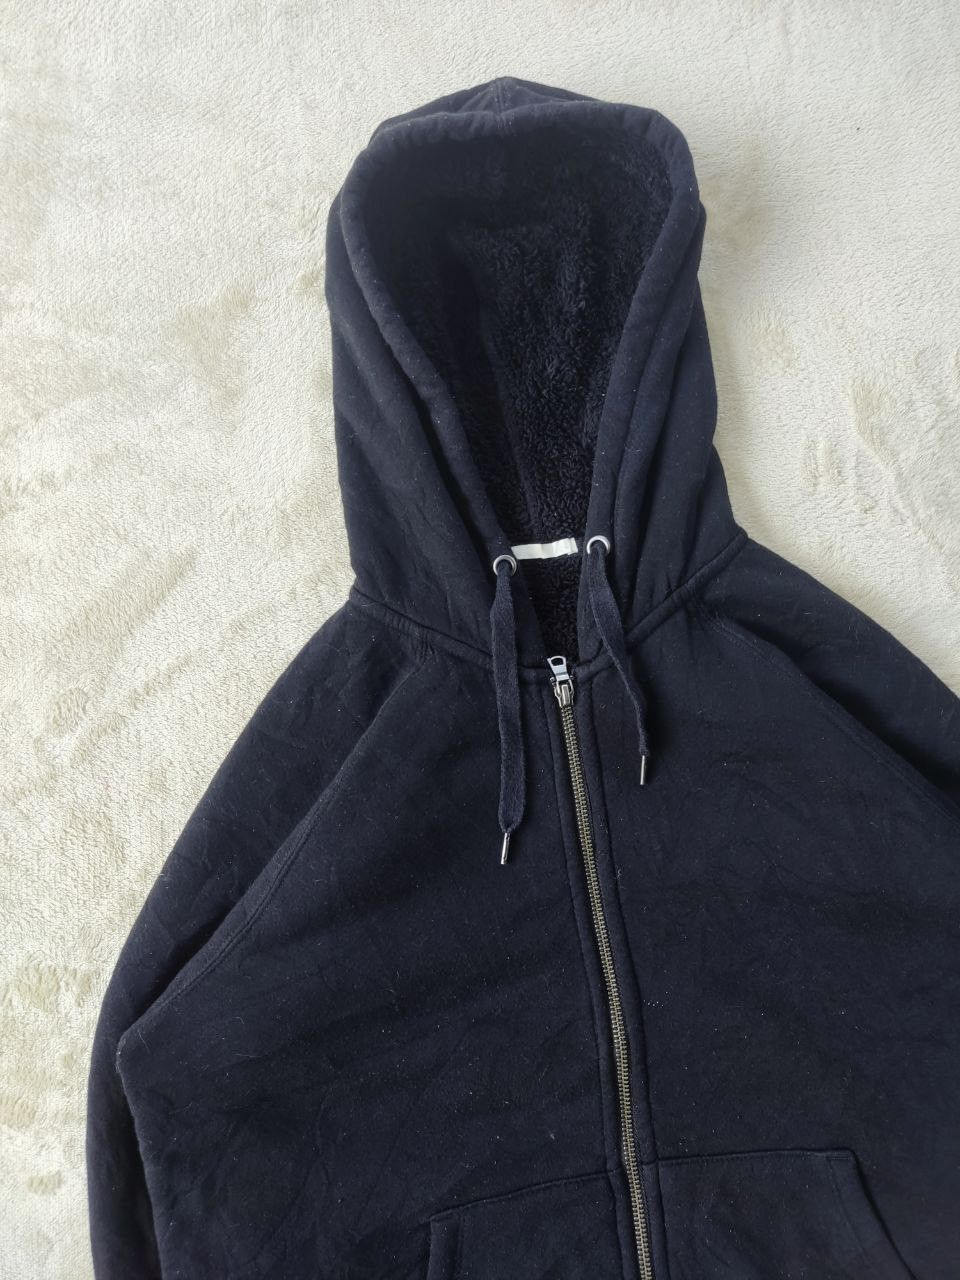 GU by Uniqlo Sherpa Lined Zipper Hoodie - 4